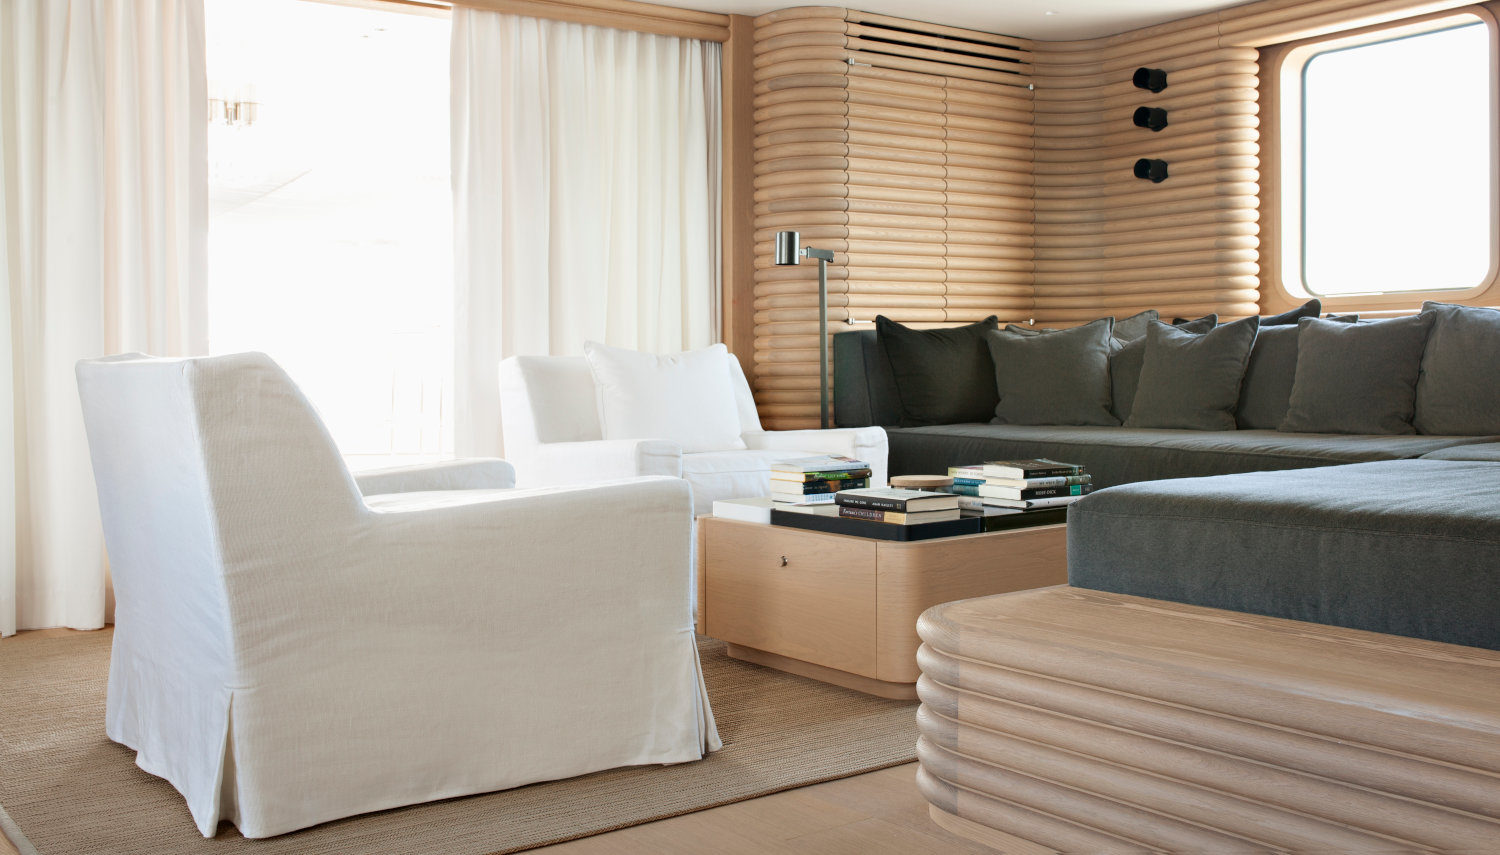 Vripack Design Studio - Refit RH3 - Interior design - Family room - Spacious couches - Creating a family home at sea - Belgian architect Vincent Van Duysen